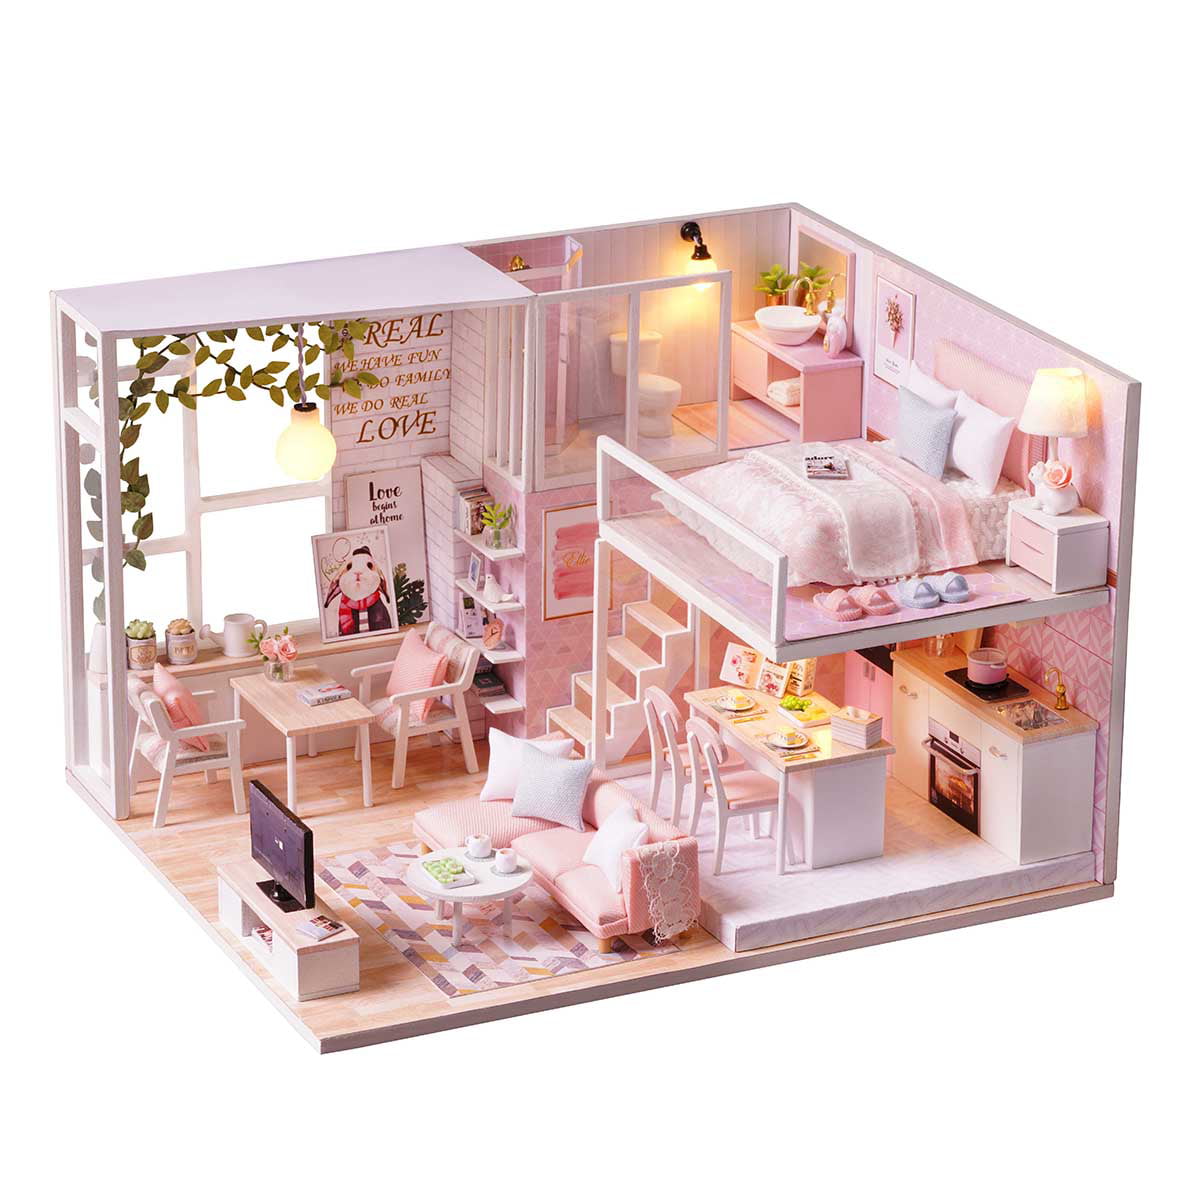 DIY DollHouse Model Kit Romantic Dream Princess Home with LED light 